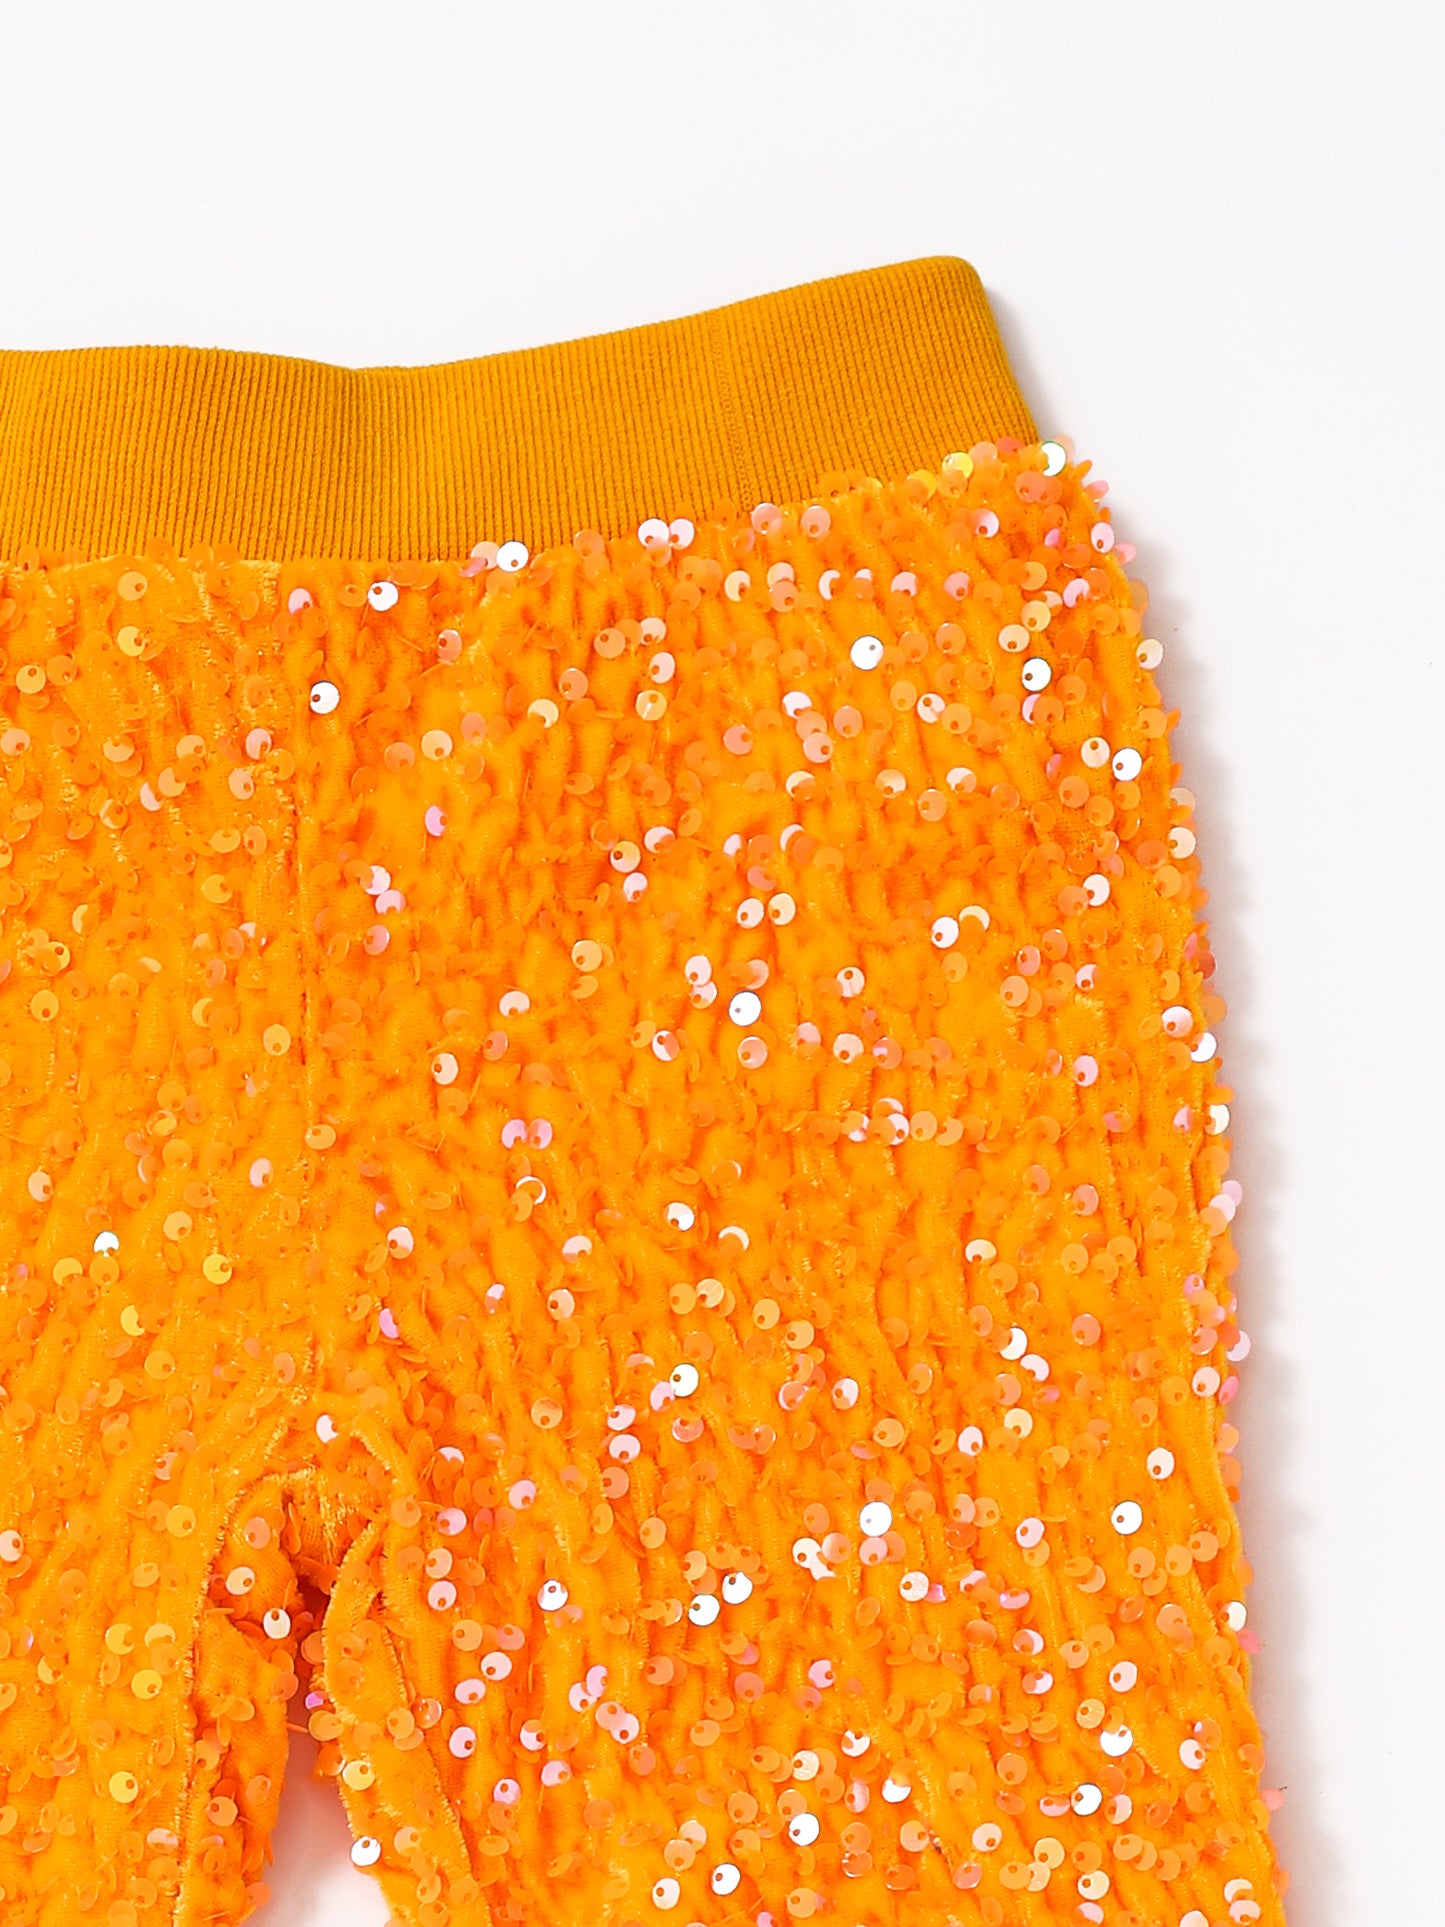 Girls Orange Sequin Flare Pants